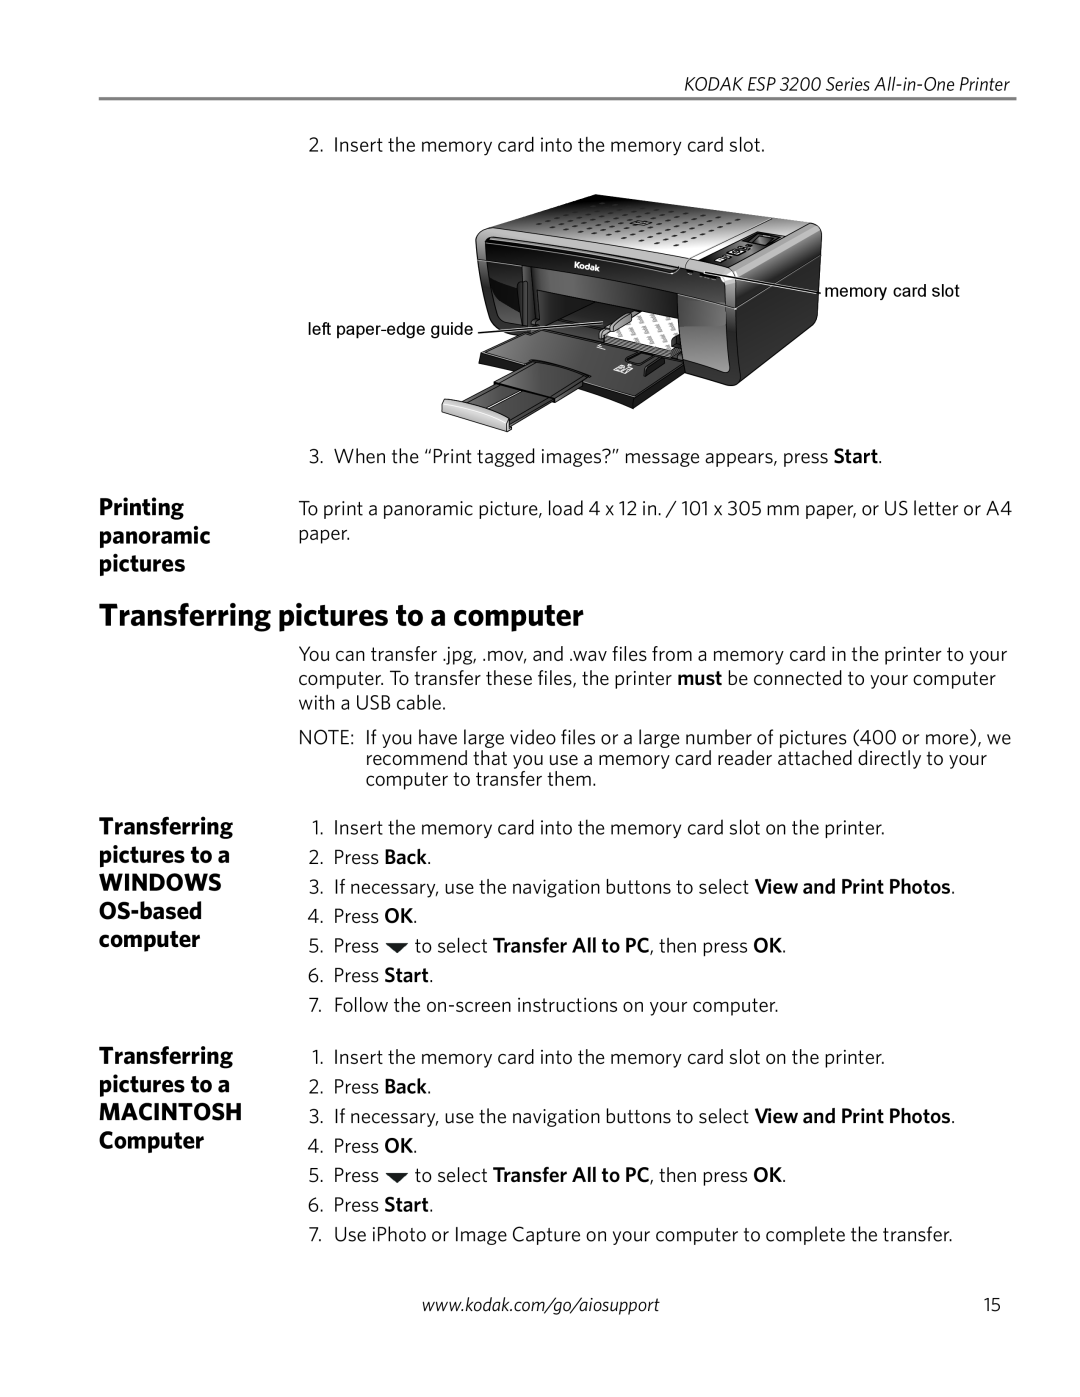 Kodak ESP 3260 Transferring pictures to a computer, Printing, panoramic, WINDOWS OS-based computer, MACINTOSH Computer 